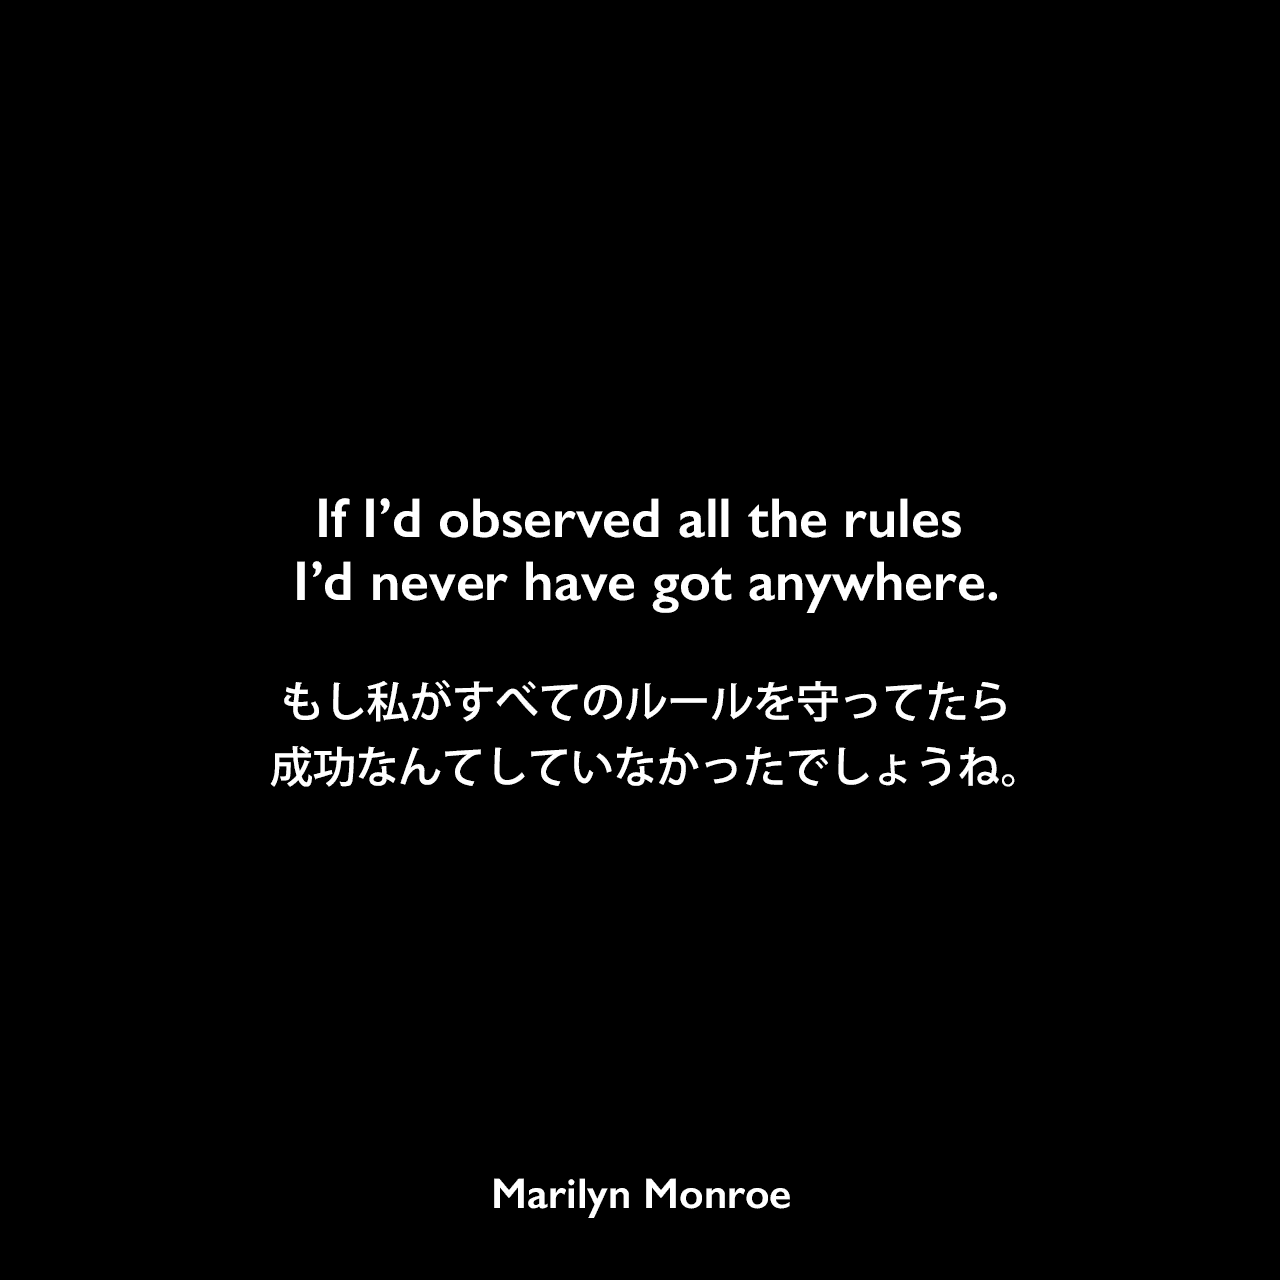 If I’d observed all the rules I’d never have got anywhere.もし私がすべてのルールを守ってたら、成功なんてしていなかったでしょうね。Marilyn Monroe